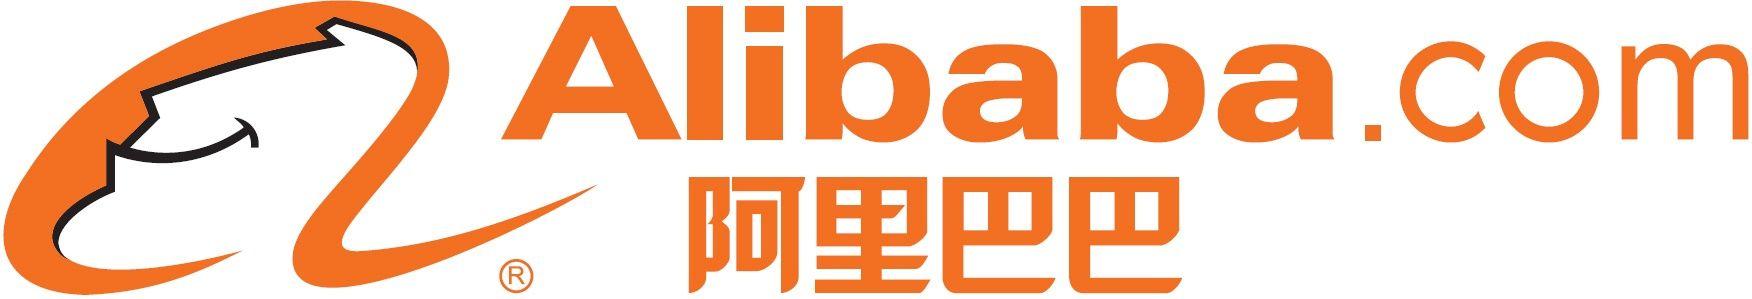 Alibaba.com Logo - Alibaba and Suning Commerce Enter Into Strategic Alliance | Business ...